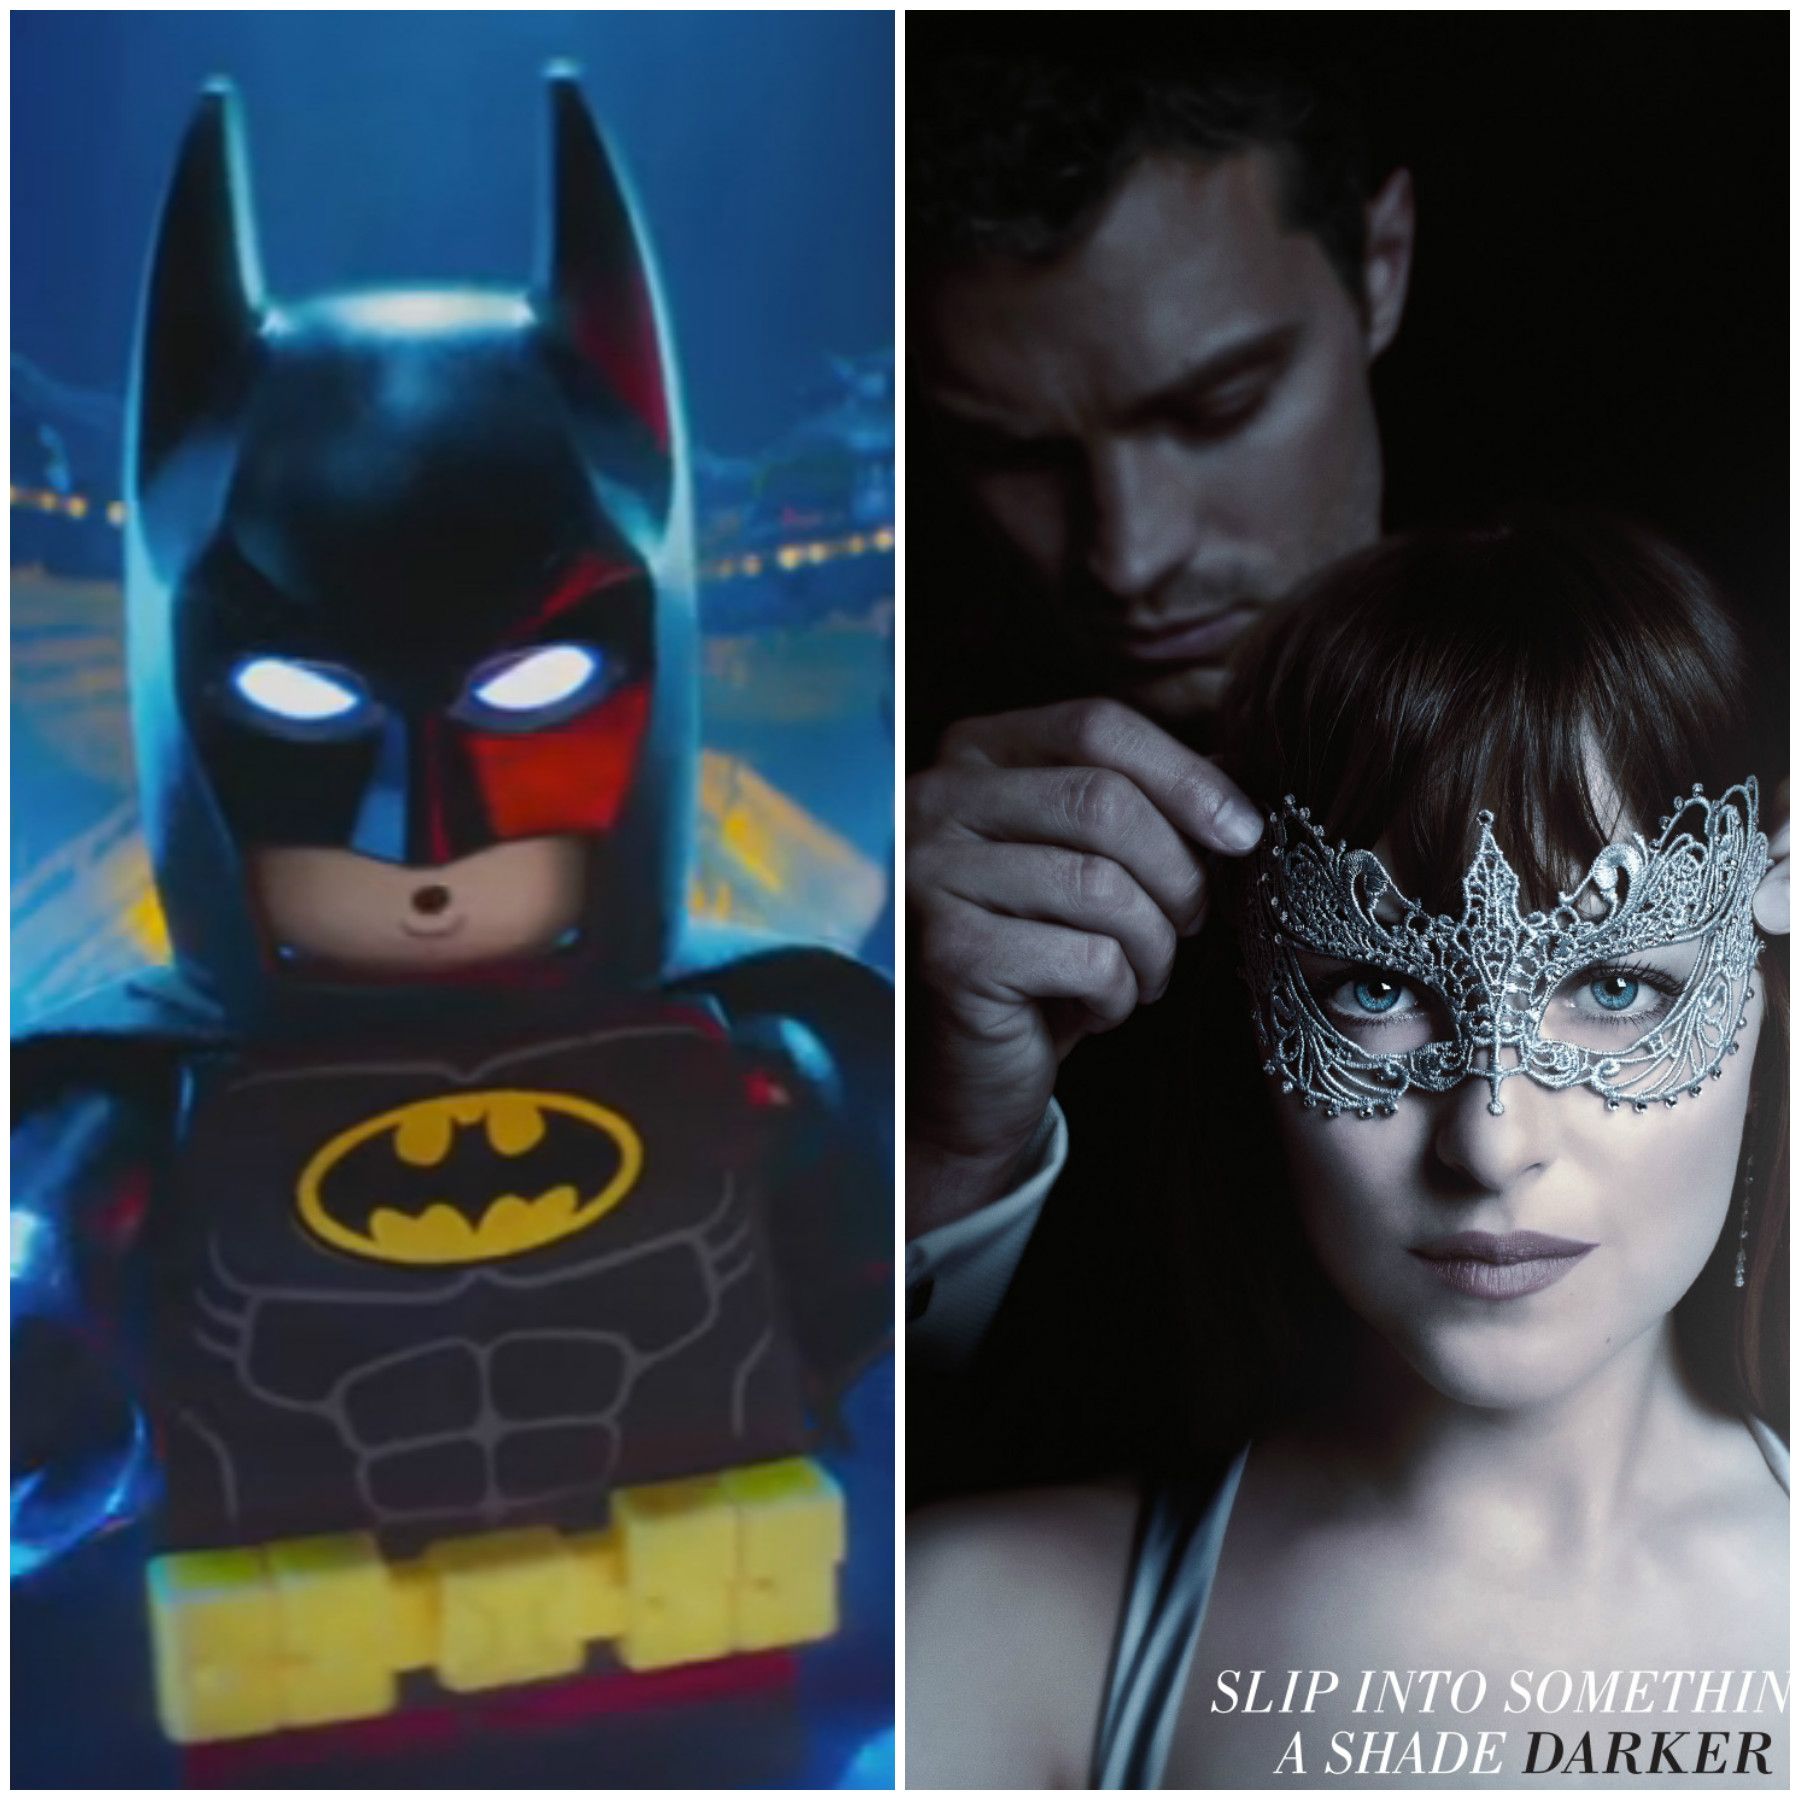 WATCH: 'Lego Batman' dominates 'Fifty Shades Darker' at box office